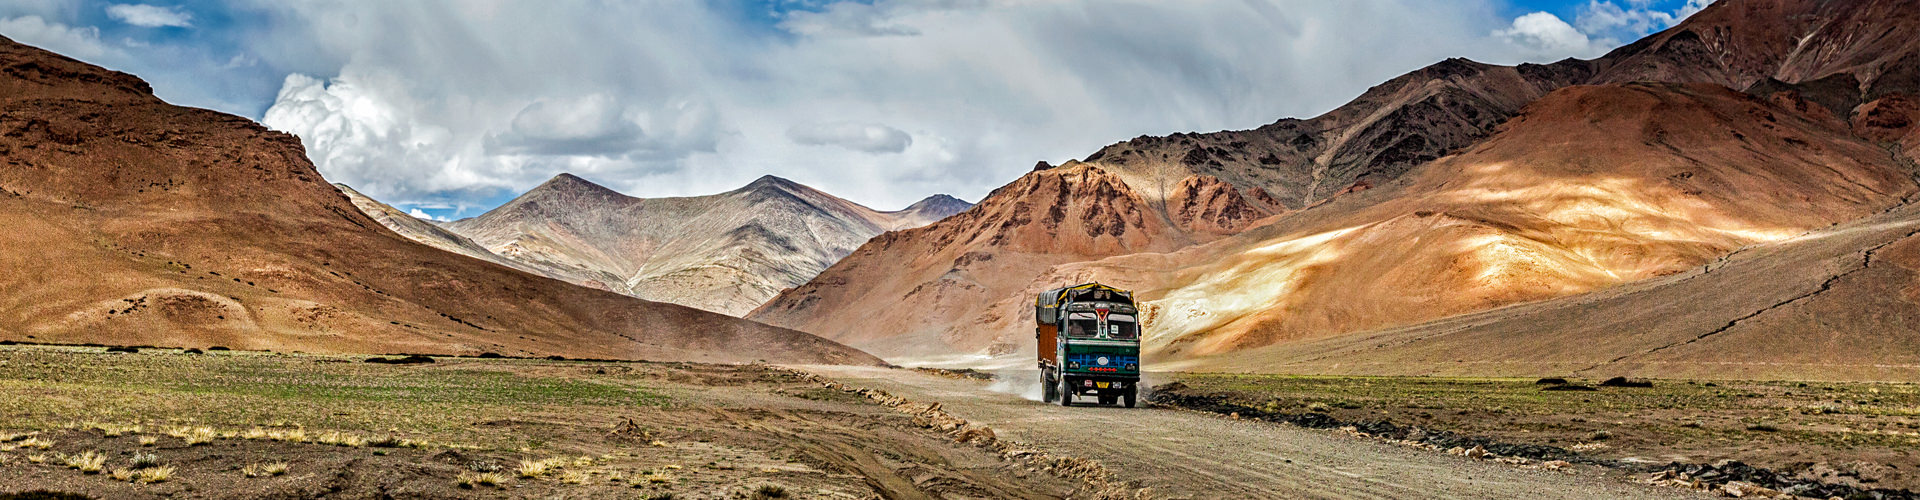 How we helped Tata Motors change India’s perception of trucking